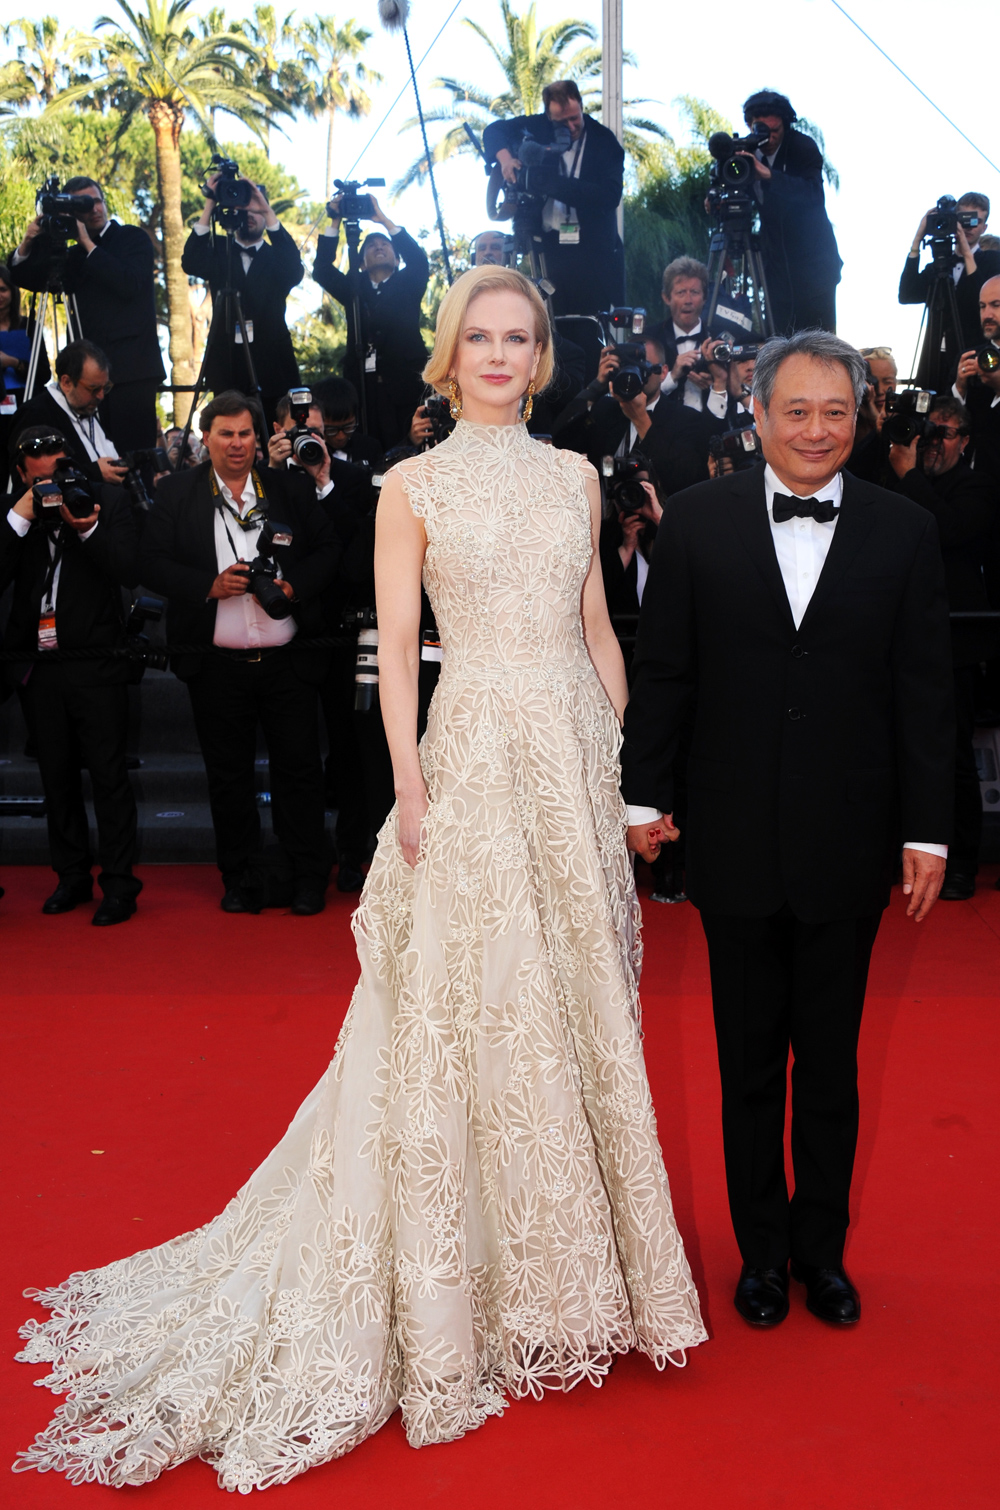 Kidman and fellow Cannes juror director of Crouching Tiger, Hidden Dragon, Ang Lee